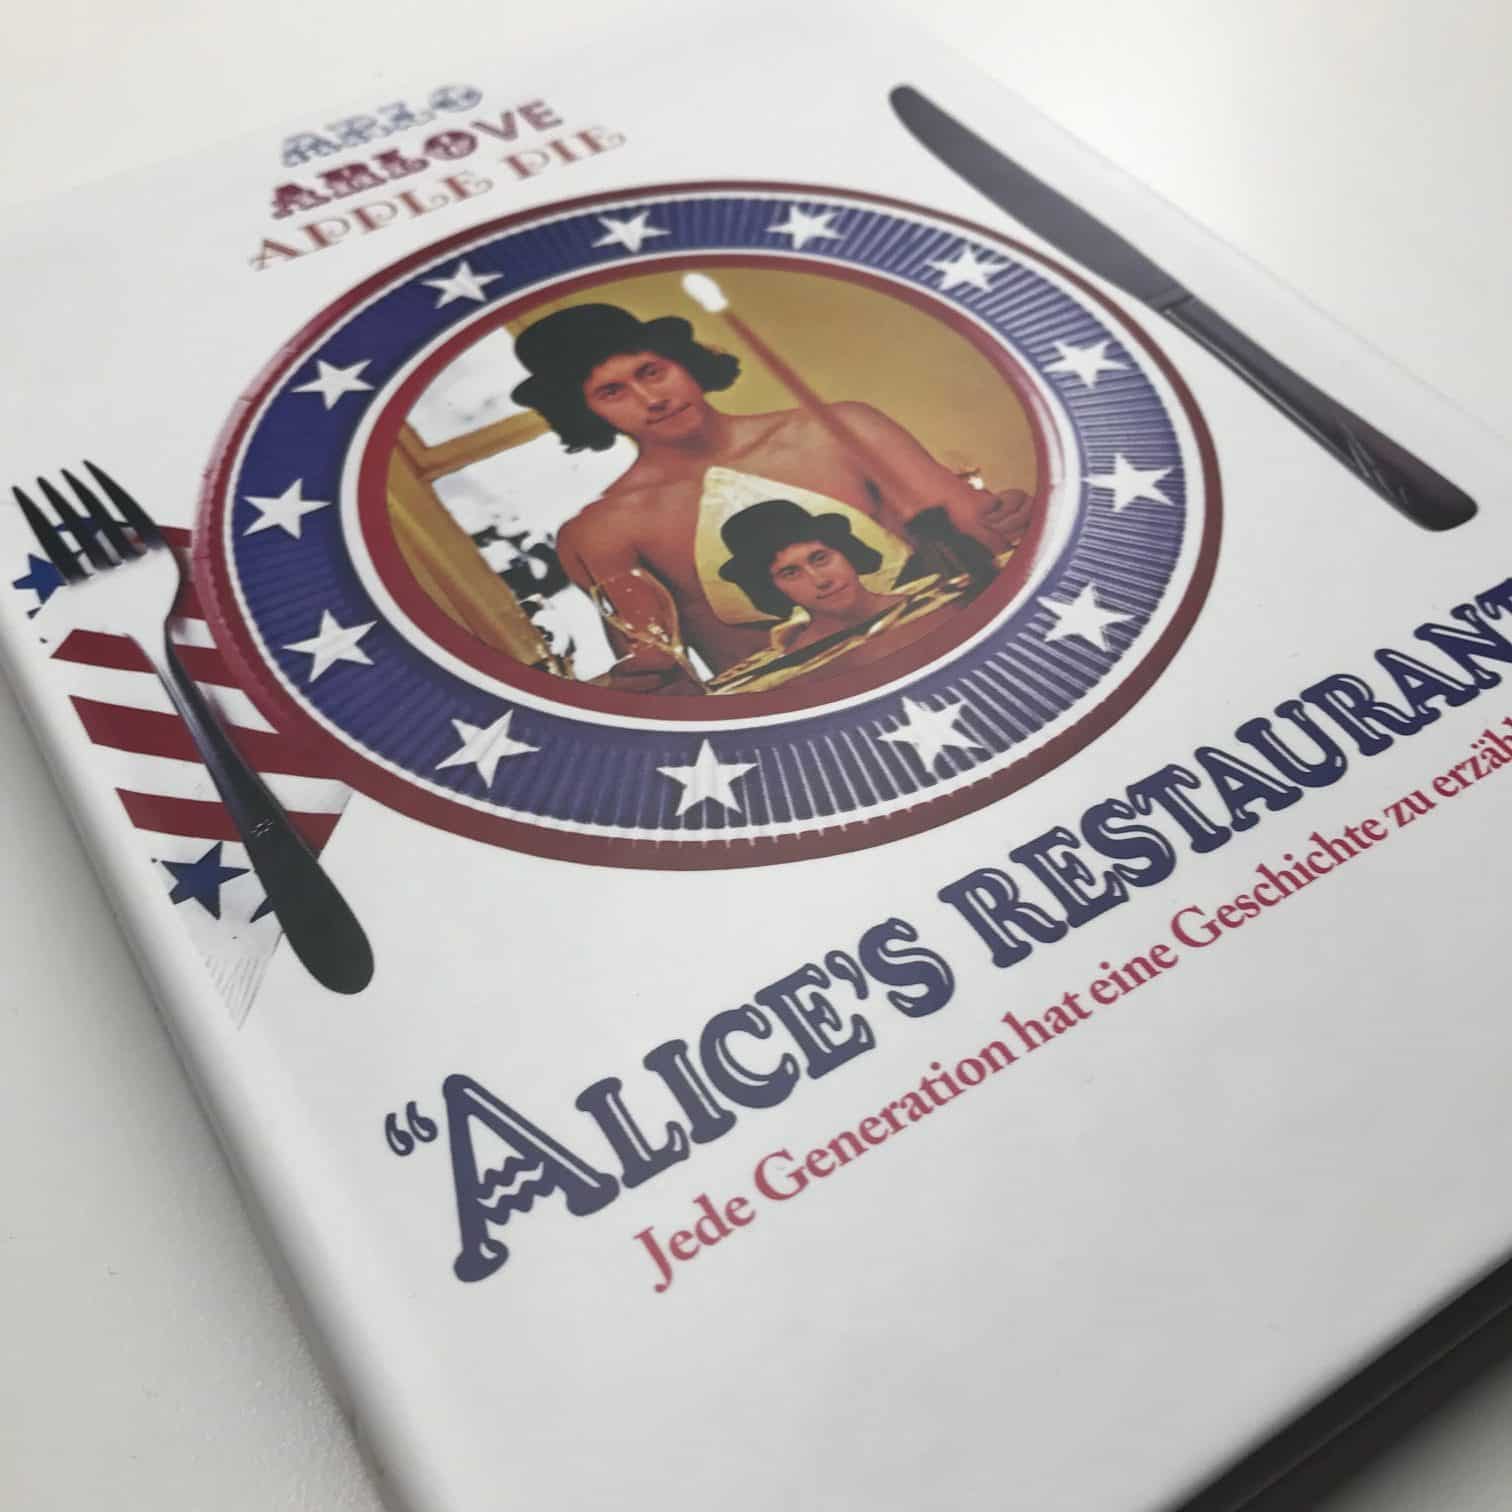 [Review] Alice’s Restaurant (1969) als Blu-ray-Mediabook (inkl. DVD und CD)